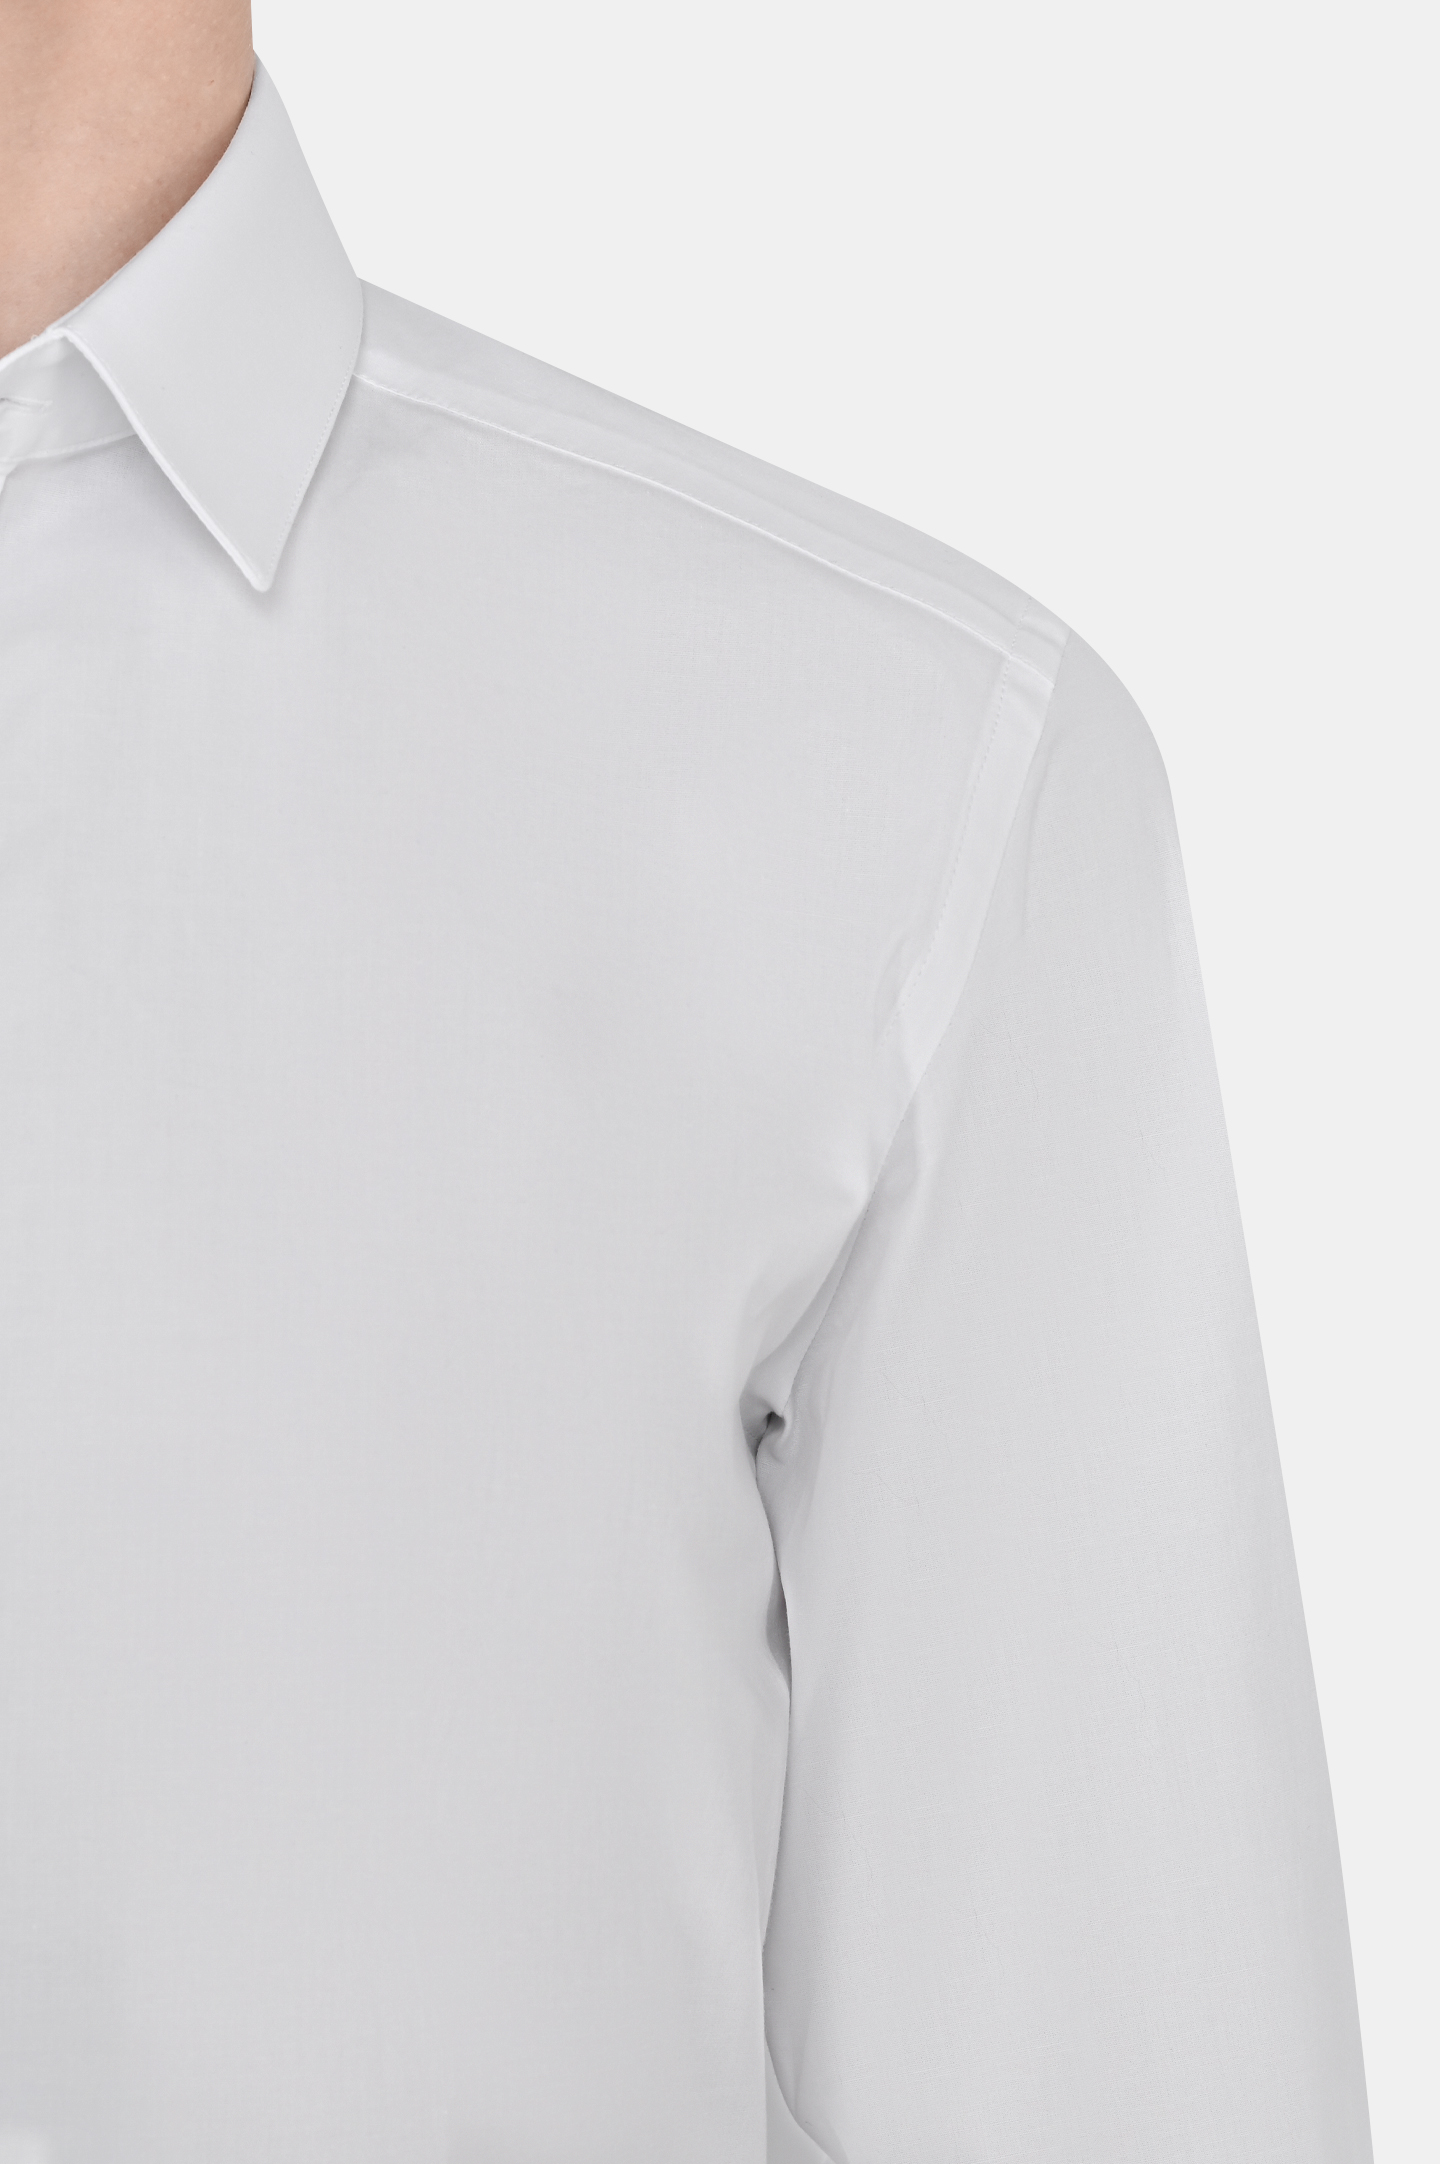 Рубашка DOLCE & GABBANA G5EJ0T FUEEE, цвет: Белый, Мужской